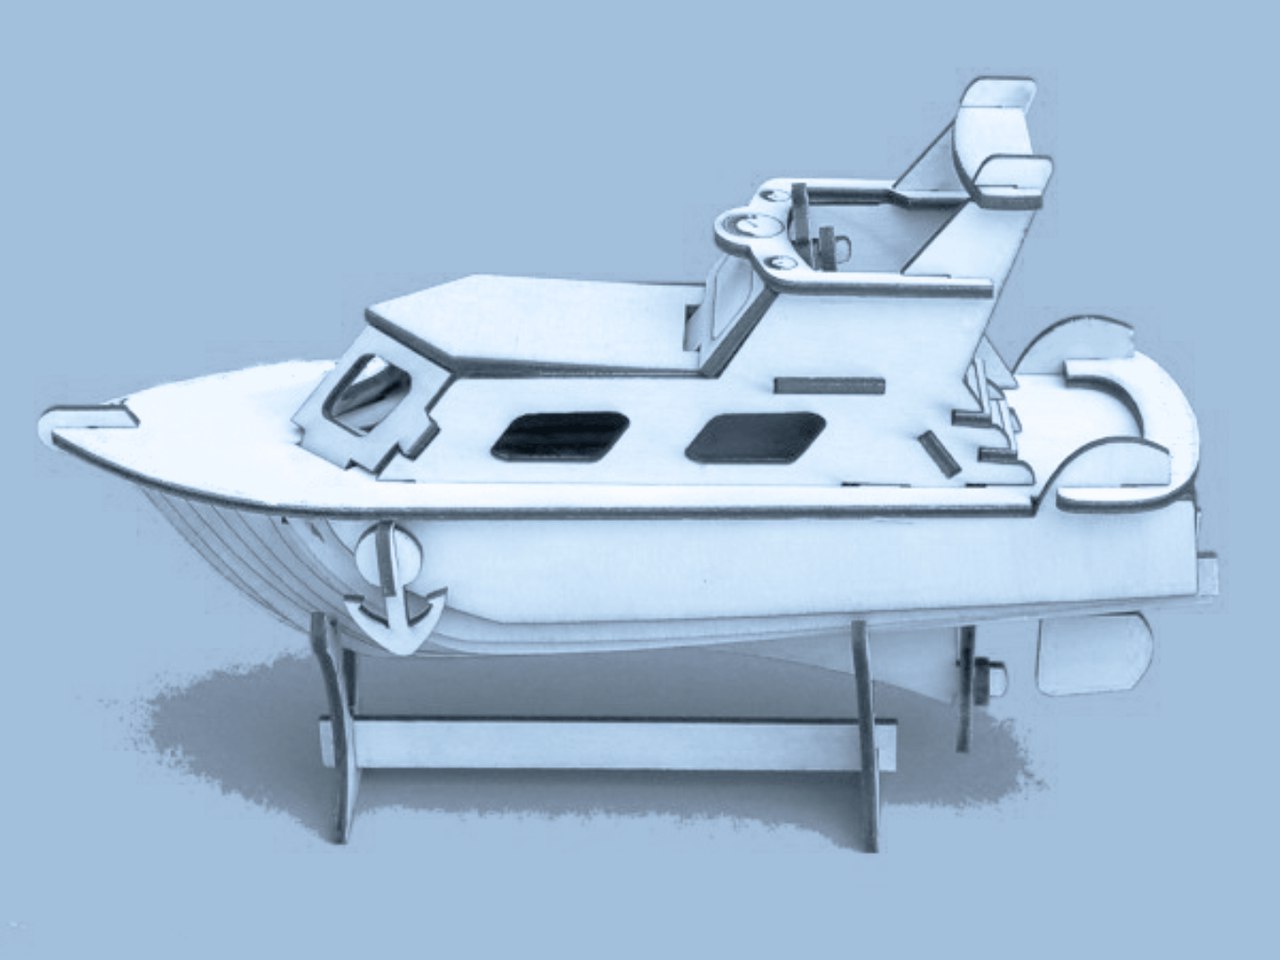 Yacht Laser Cut Puzzle Model Free Vector Free Vectors